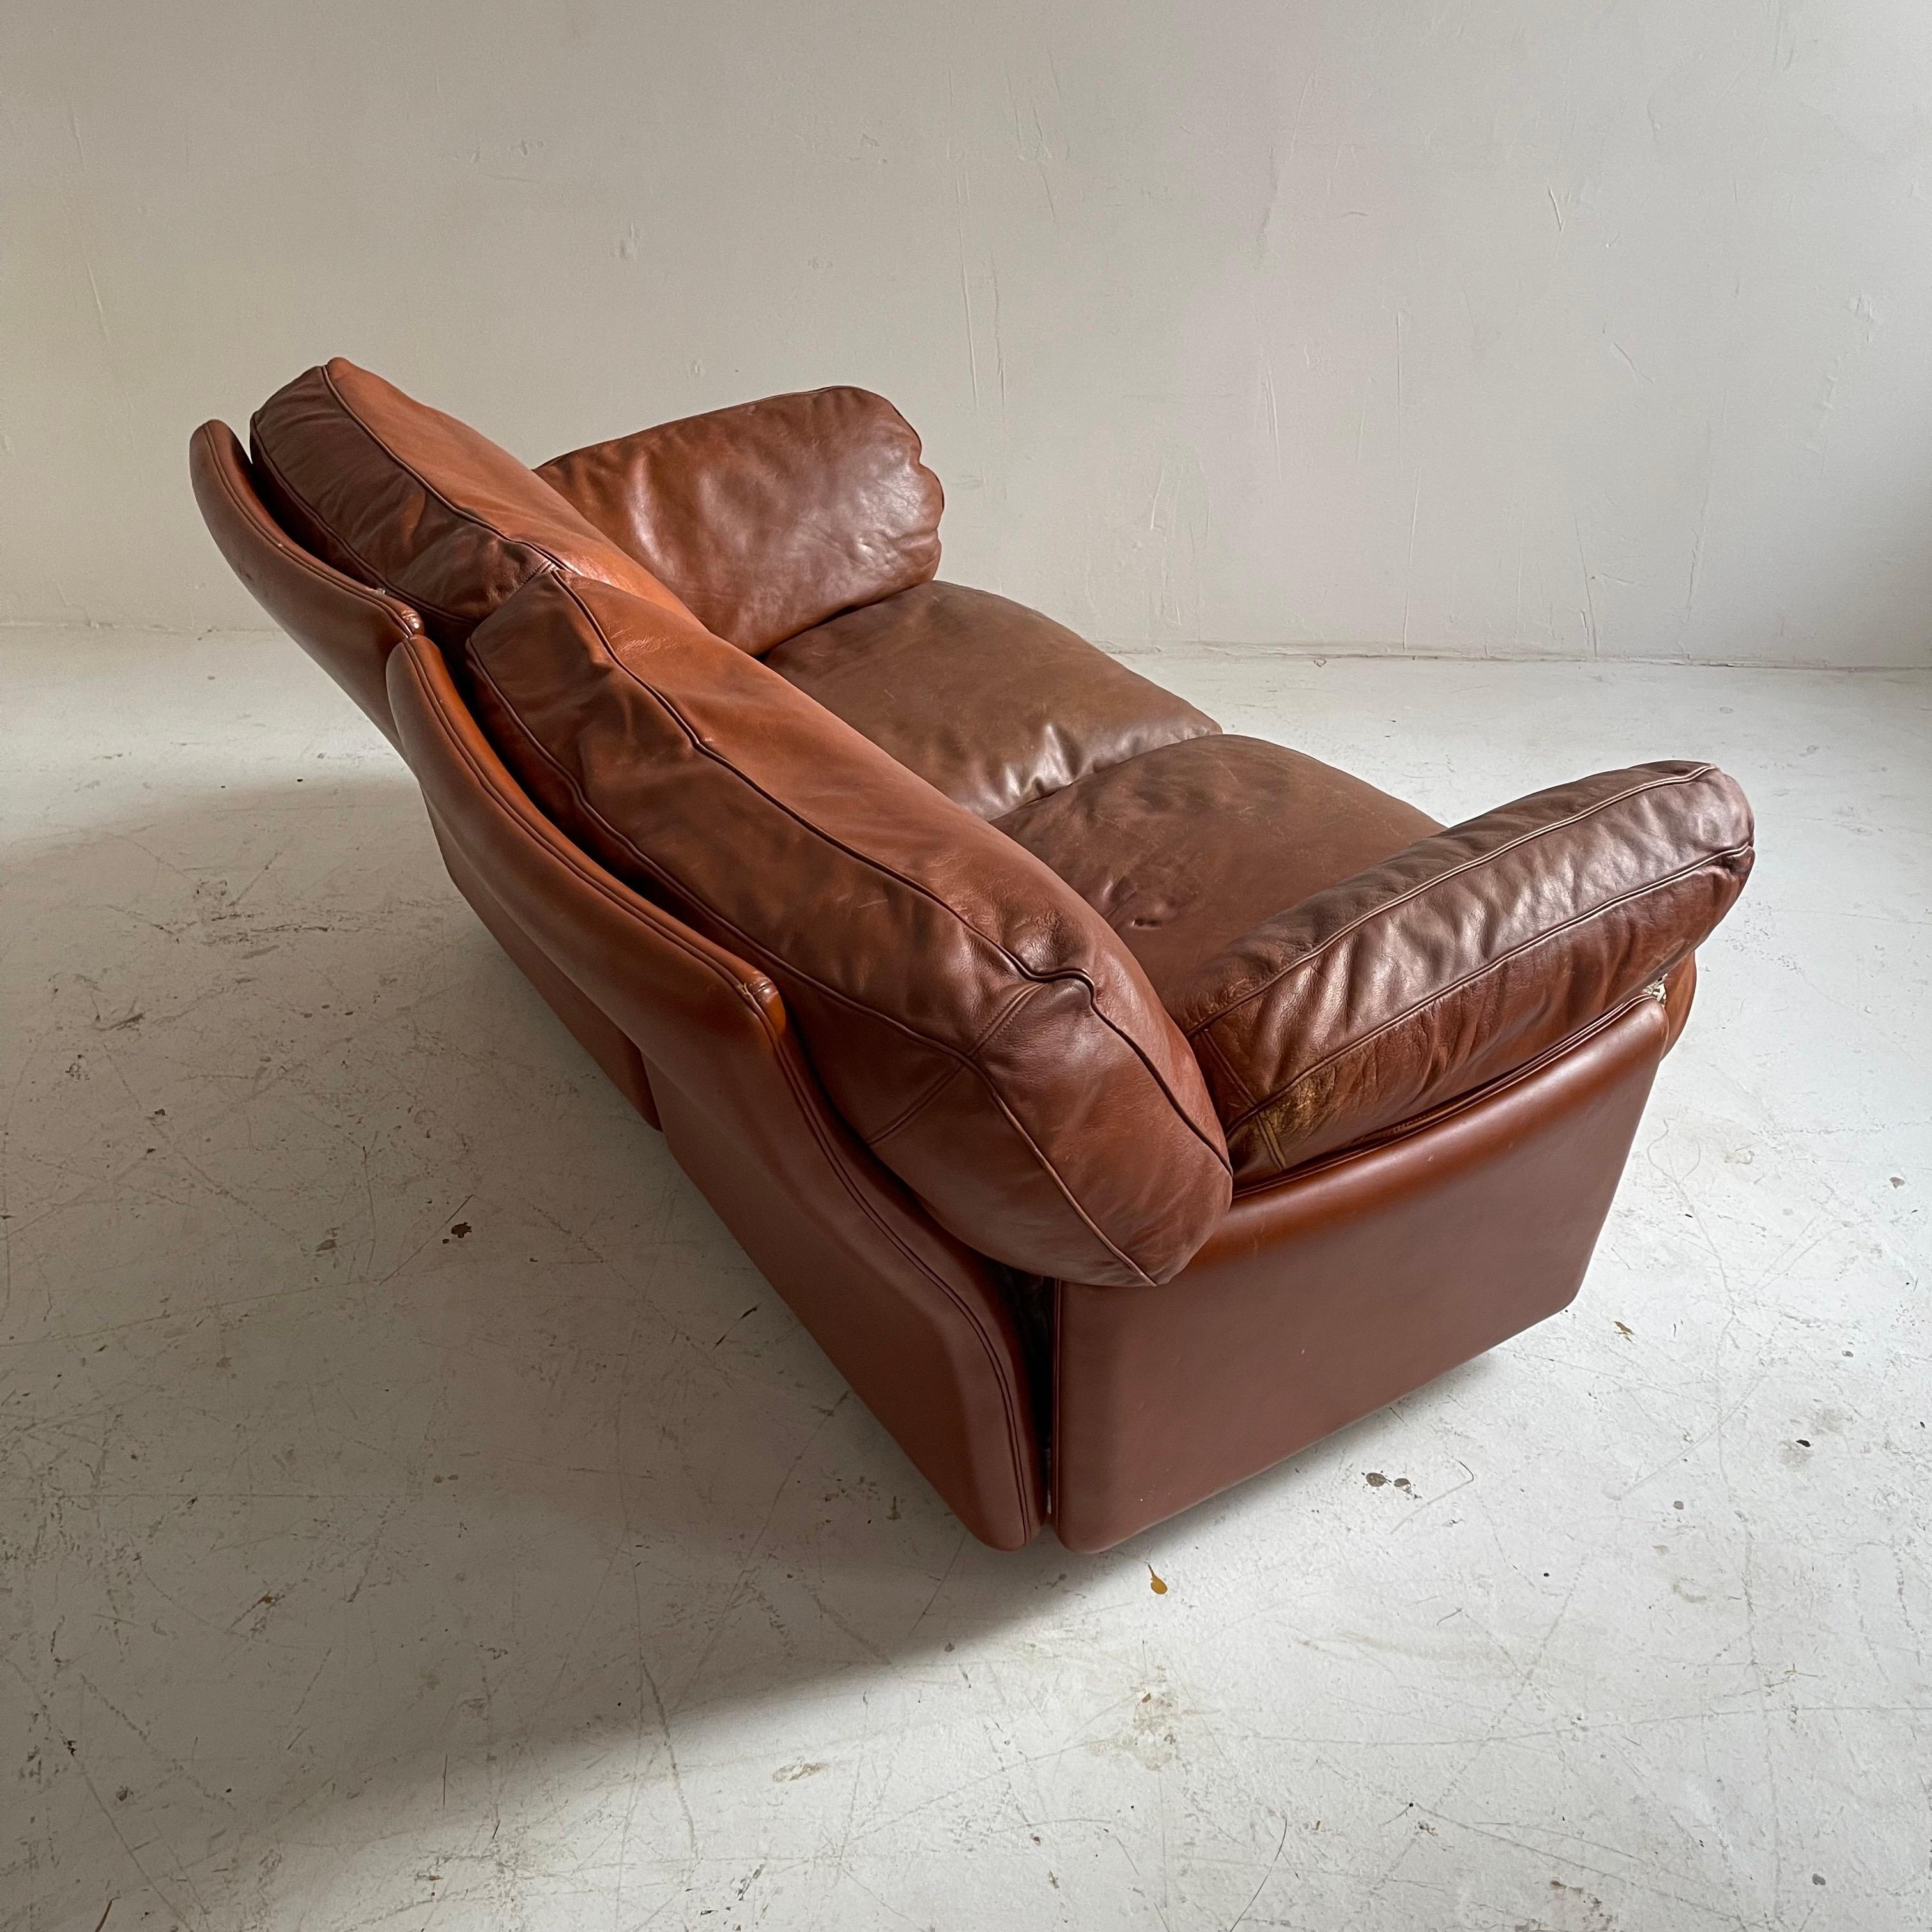 Metal Tito Agnoli Cognac Leather Sofa Suite Model 'Poppy' Poltrona Frau, Italy 1970s For Sale